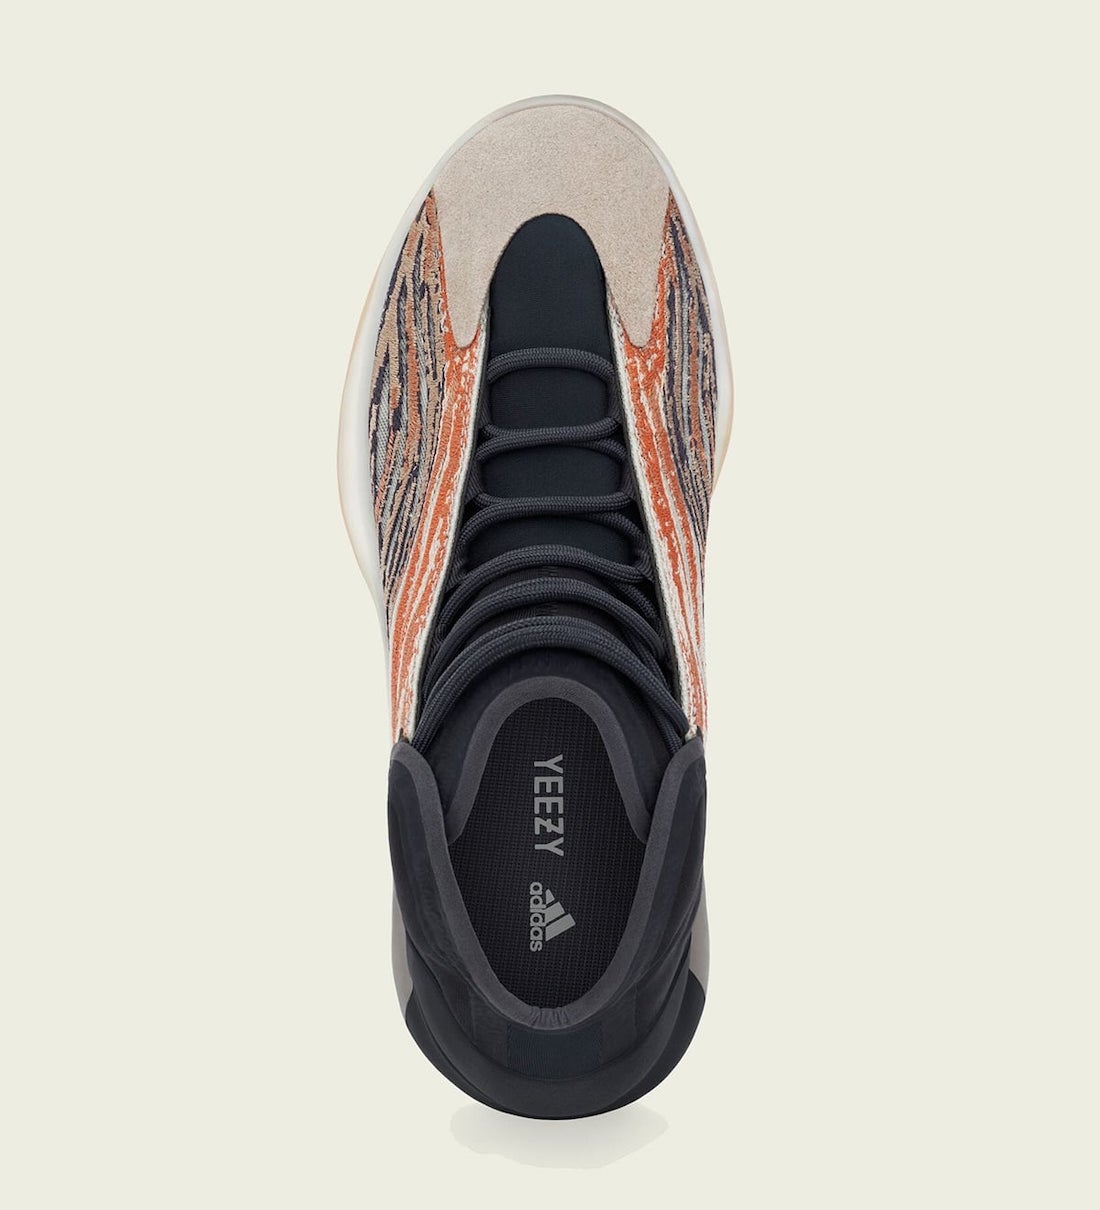 adidas yeezy quantum flash orange GW5314 release date 3